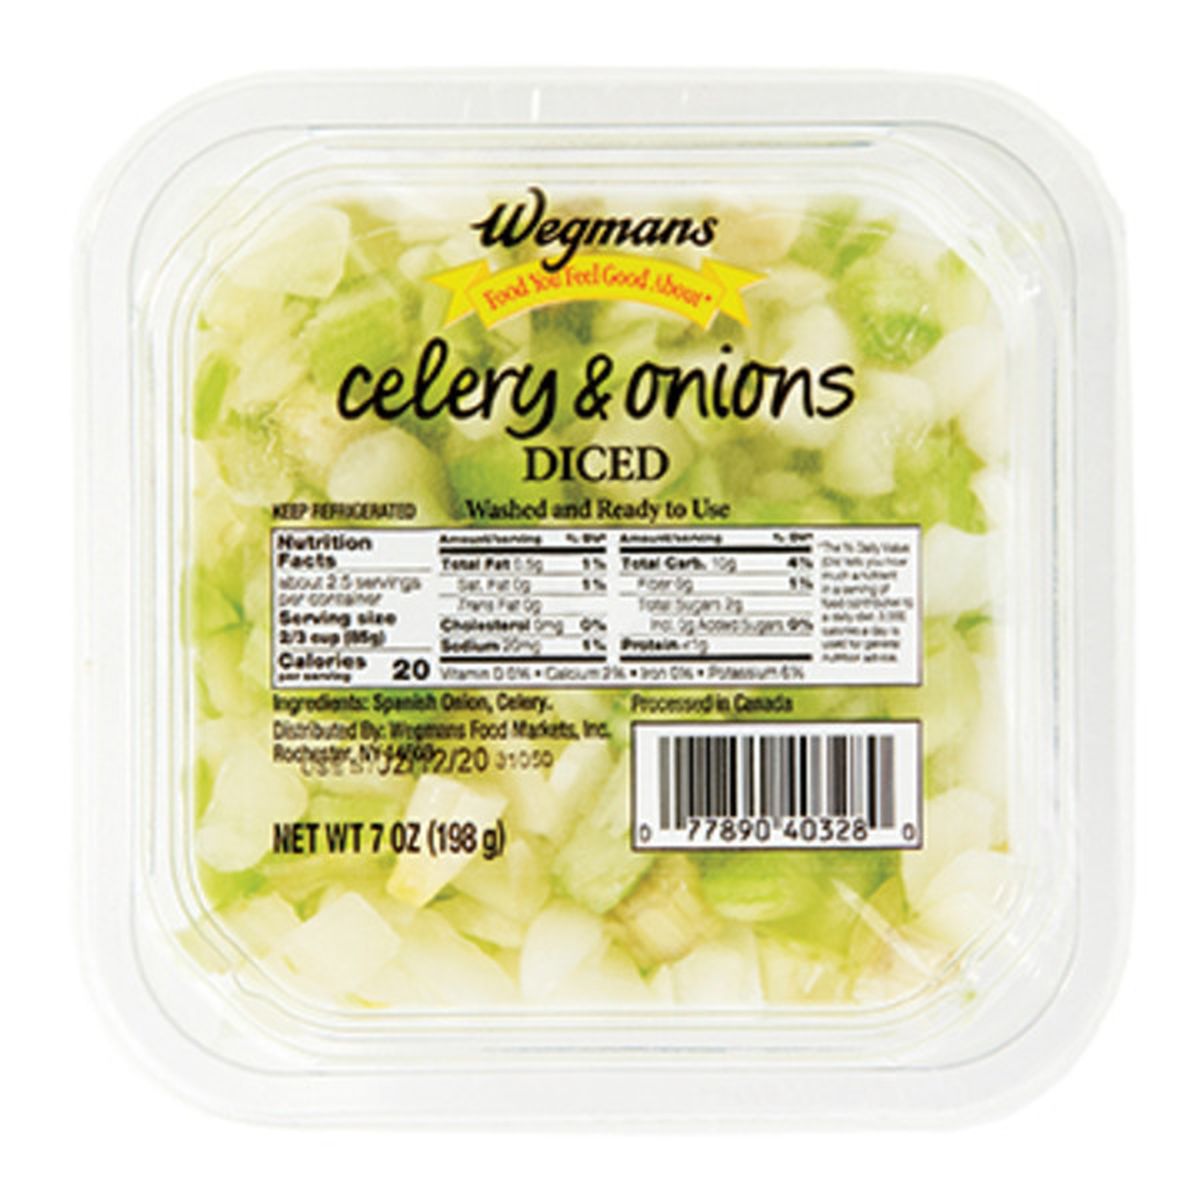 Calories in Wegmans Diced Celery & Onions